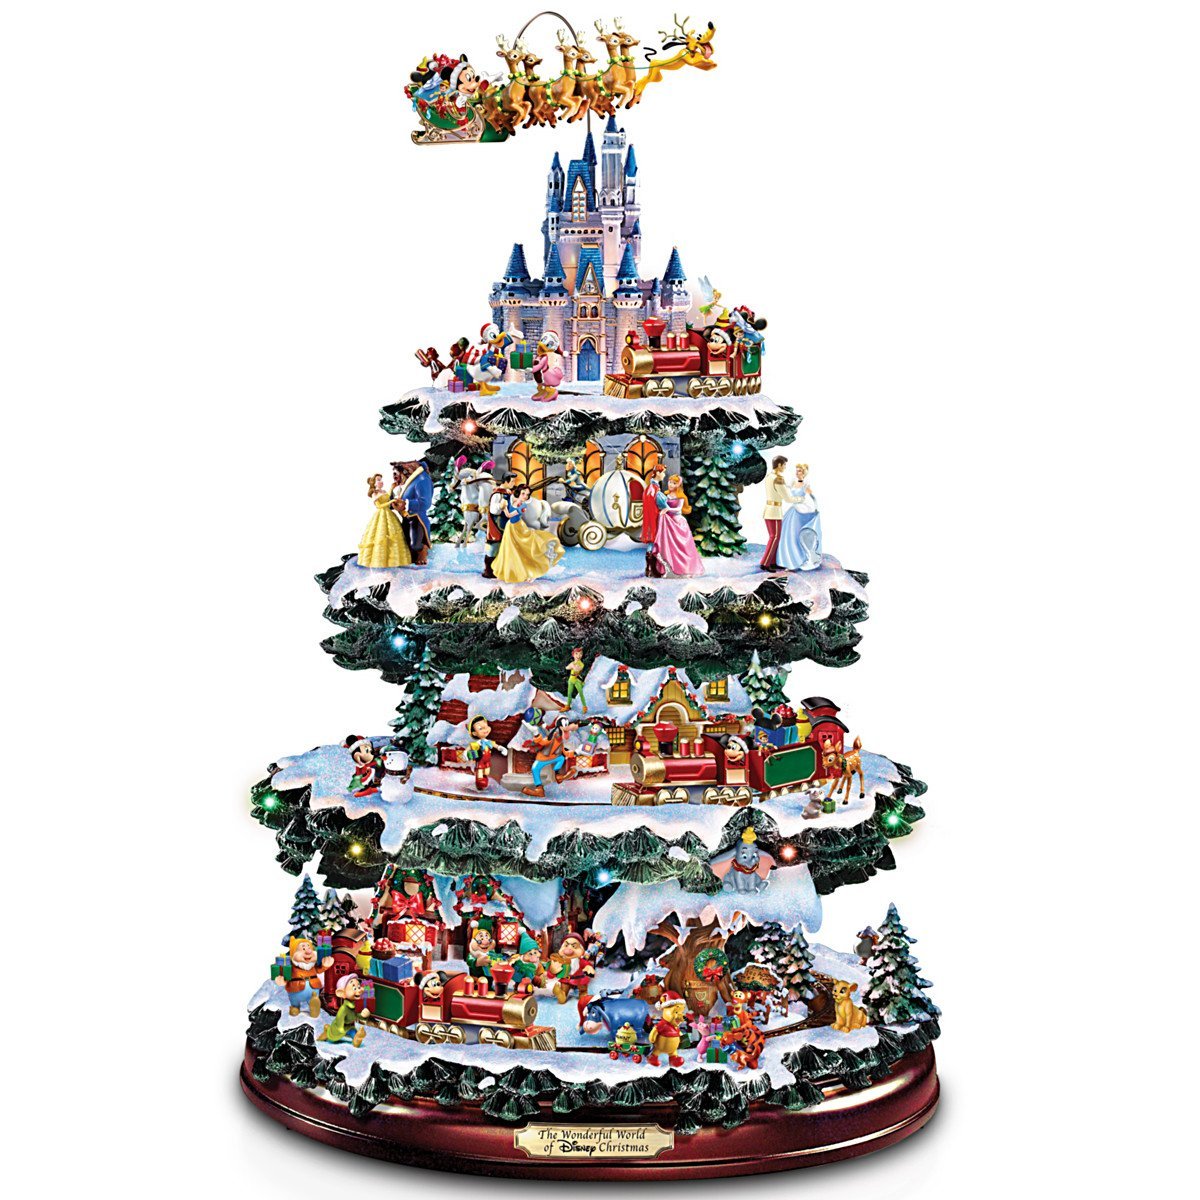 The Bradford Exchange’s Ultimate Disney Christmas Decoration